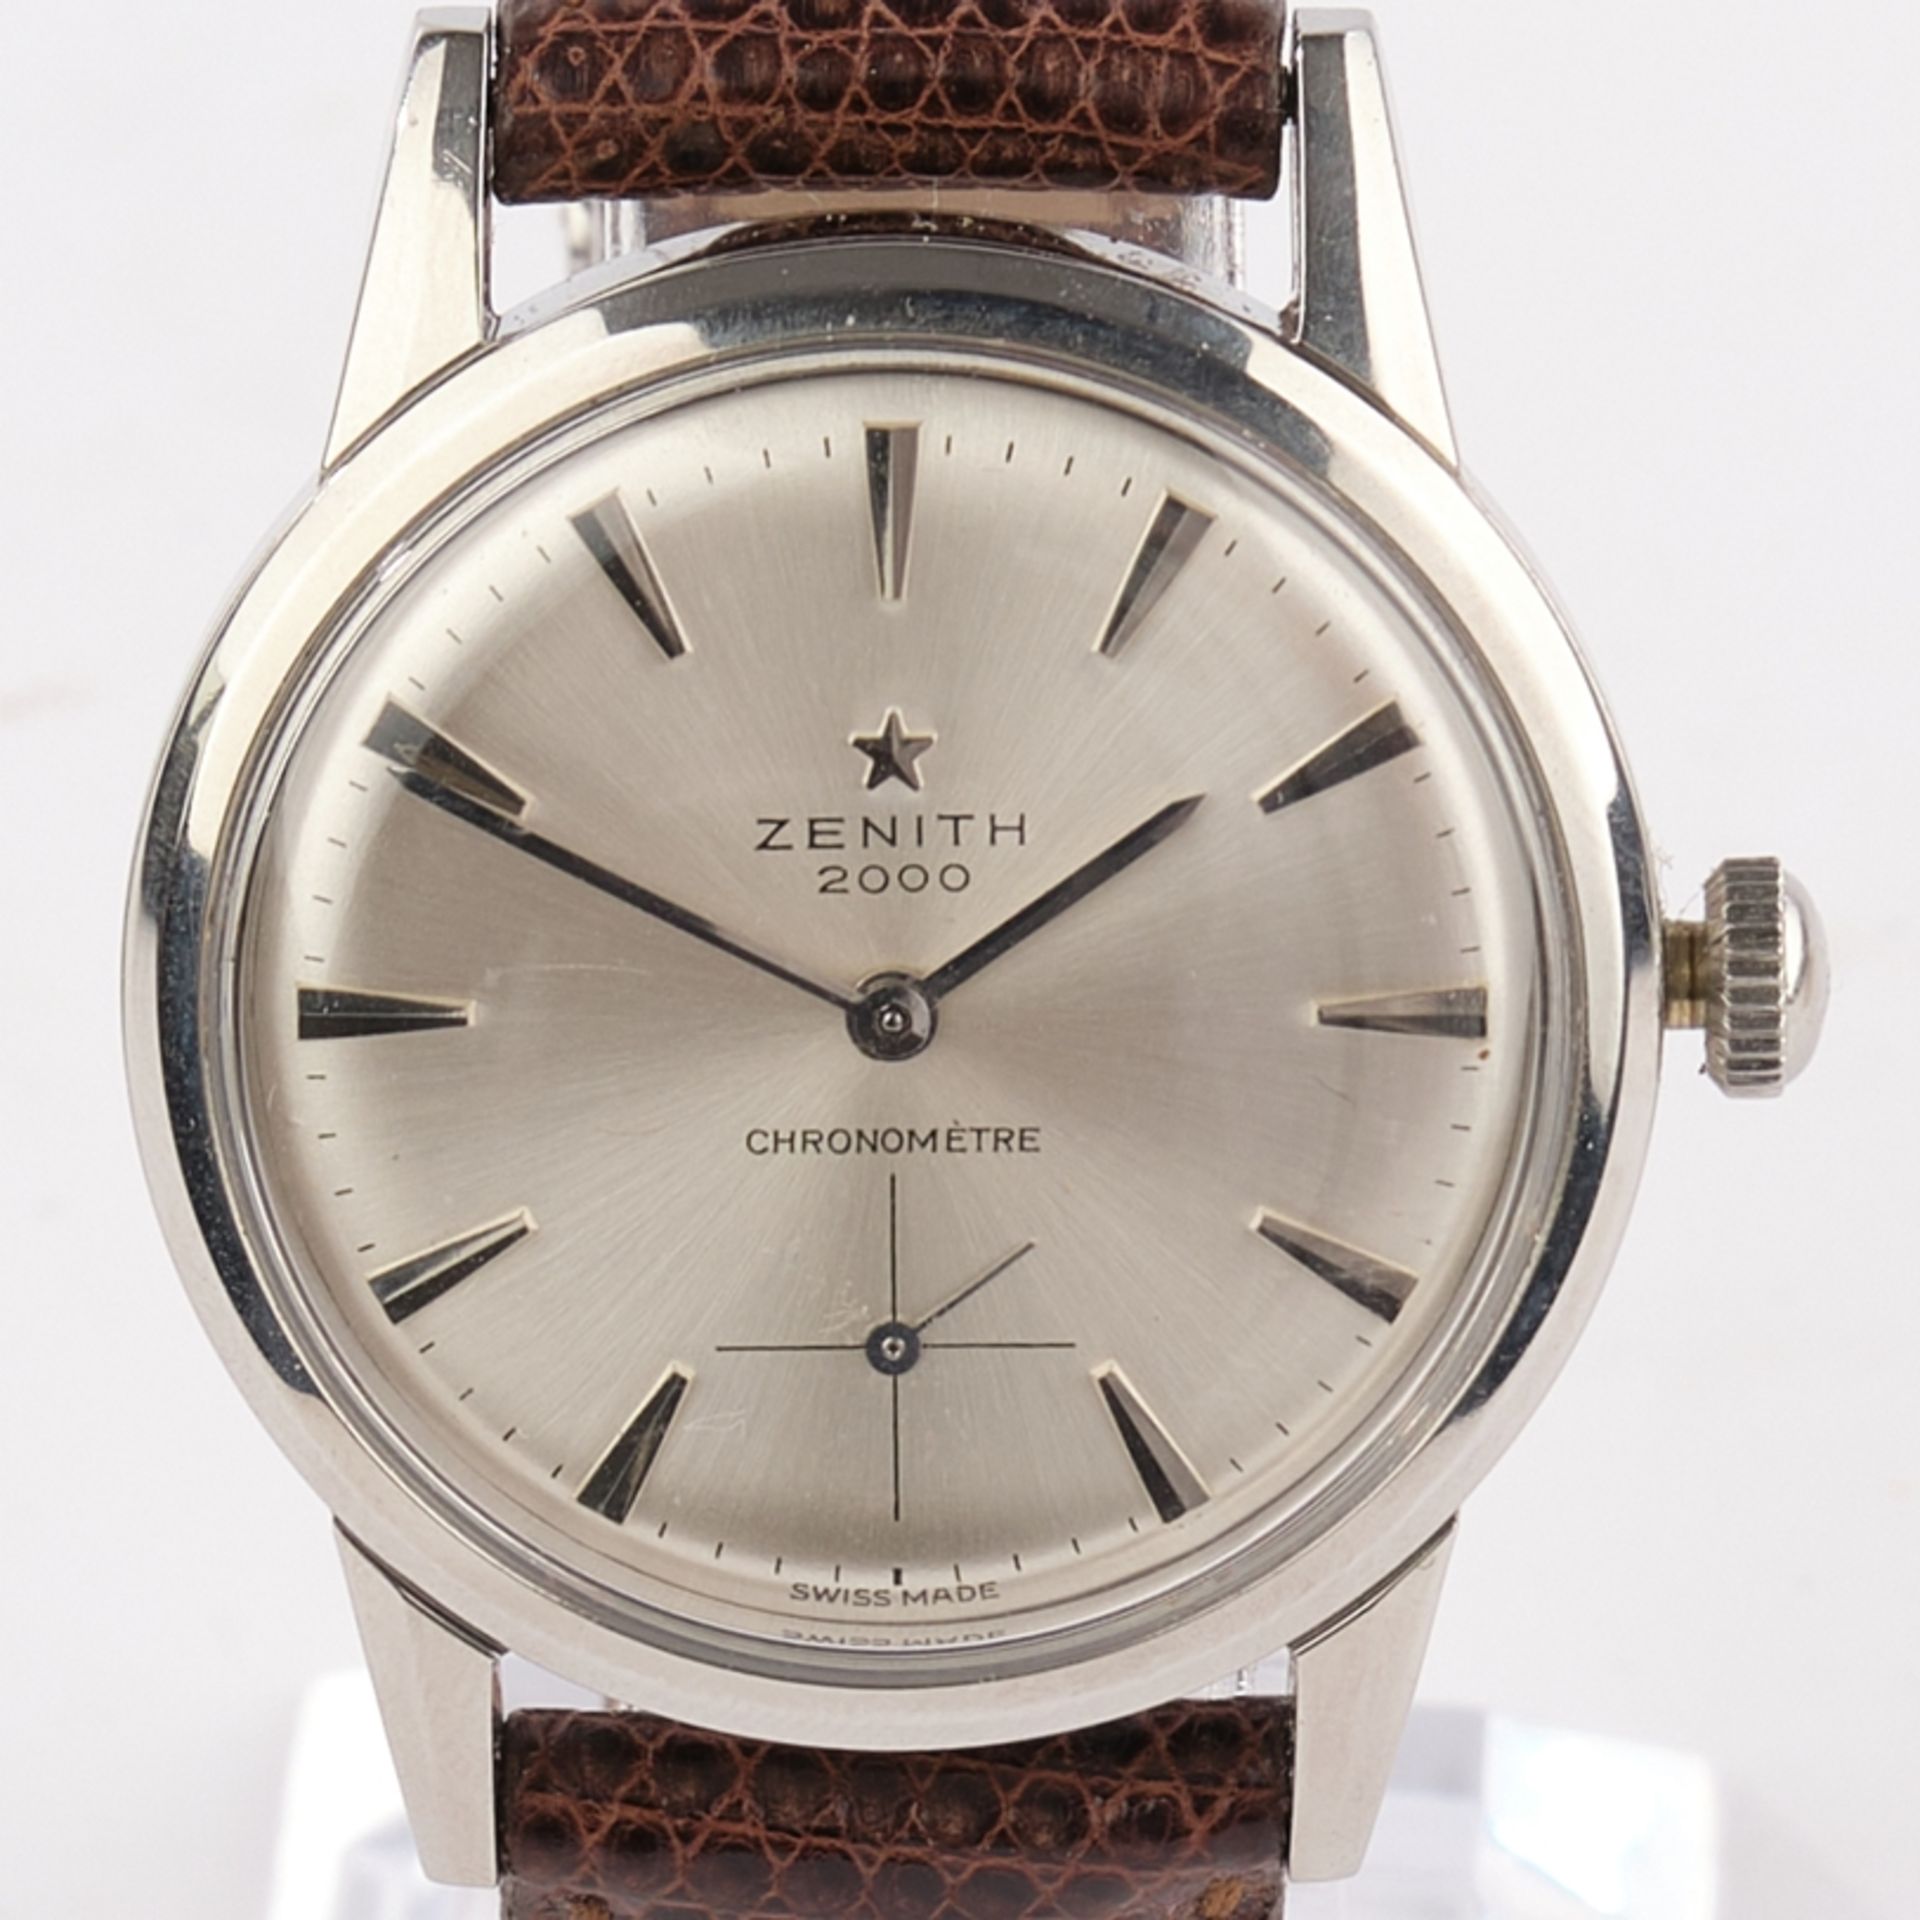 Armbanduhr Zenith 2000 Chronometer, Schweiz, 1960er Jahre, wohl Cal. 135, Handaufzug, neuwertiges b - Image 2 of 7